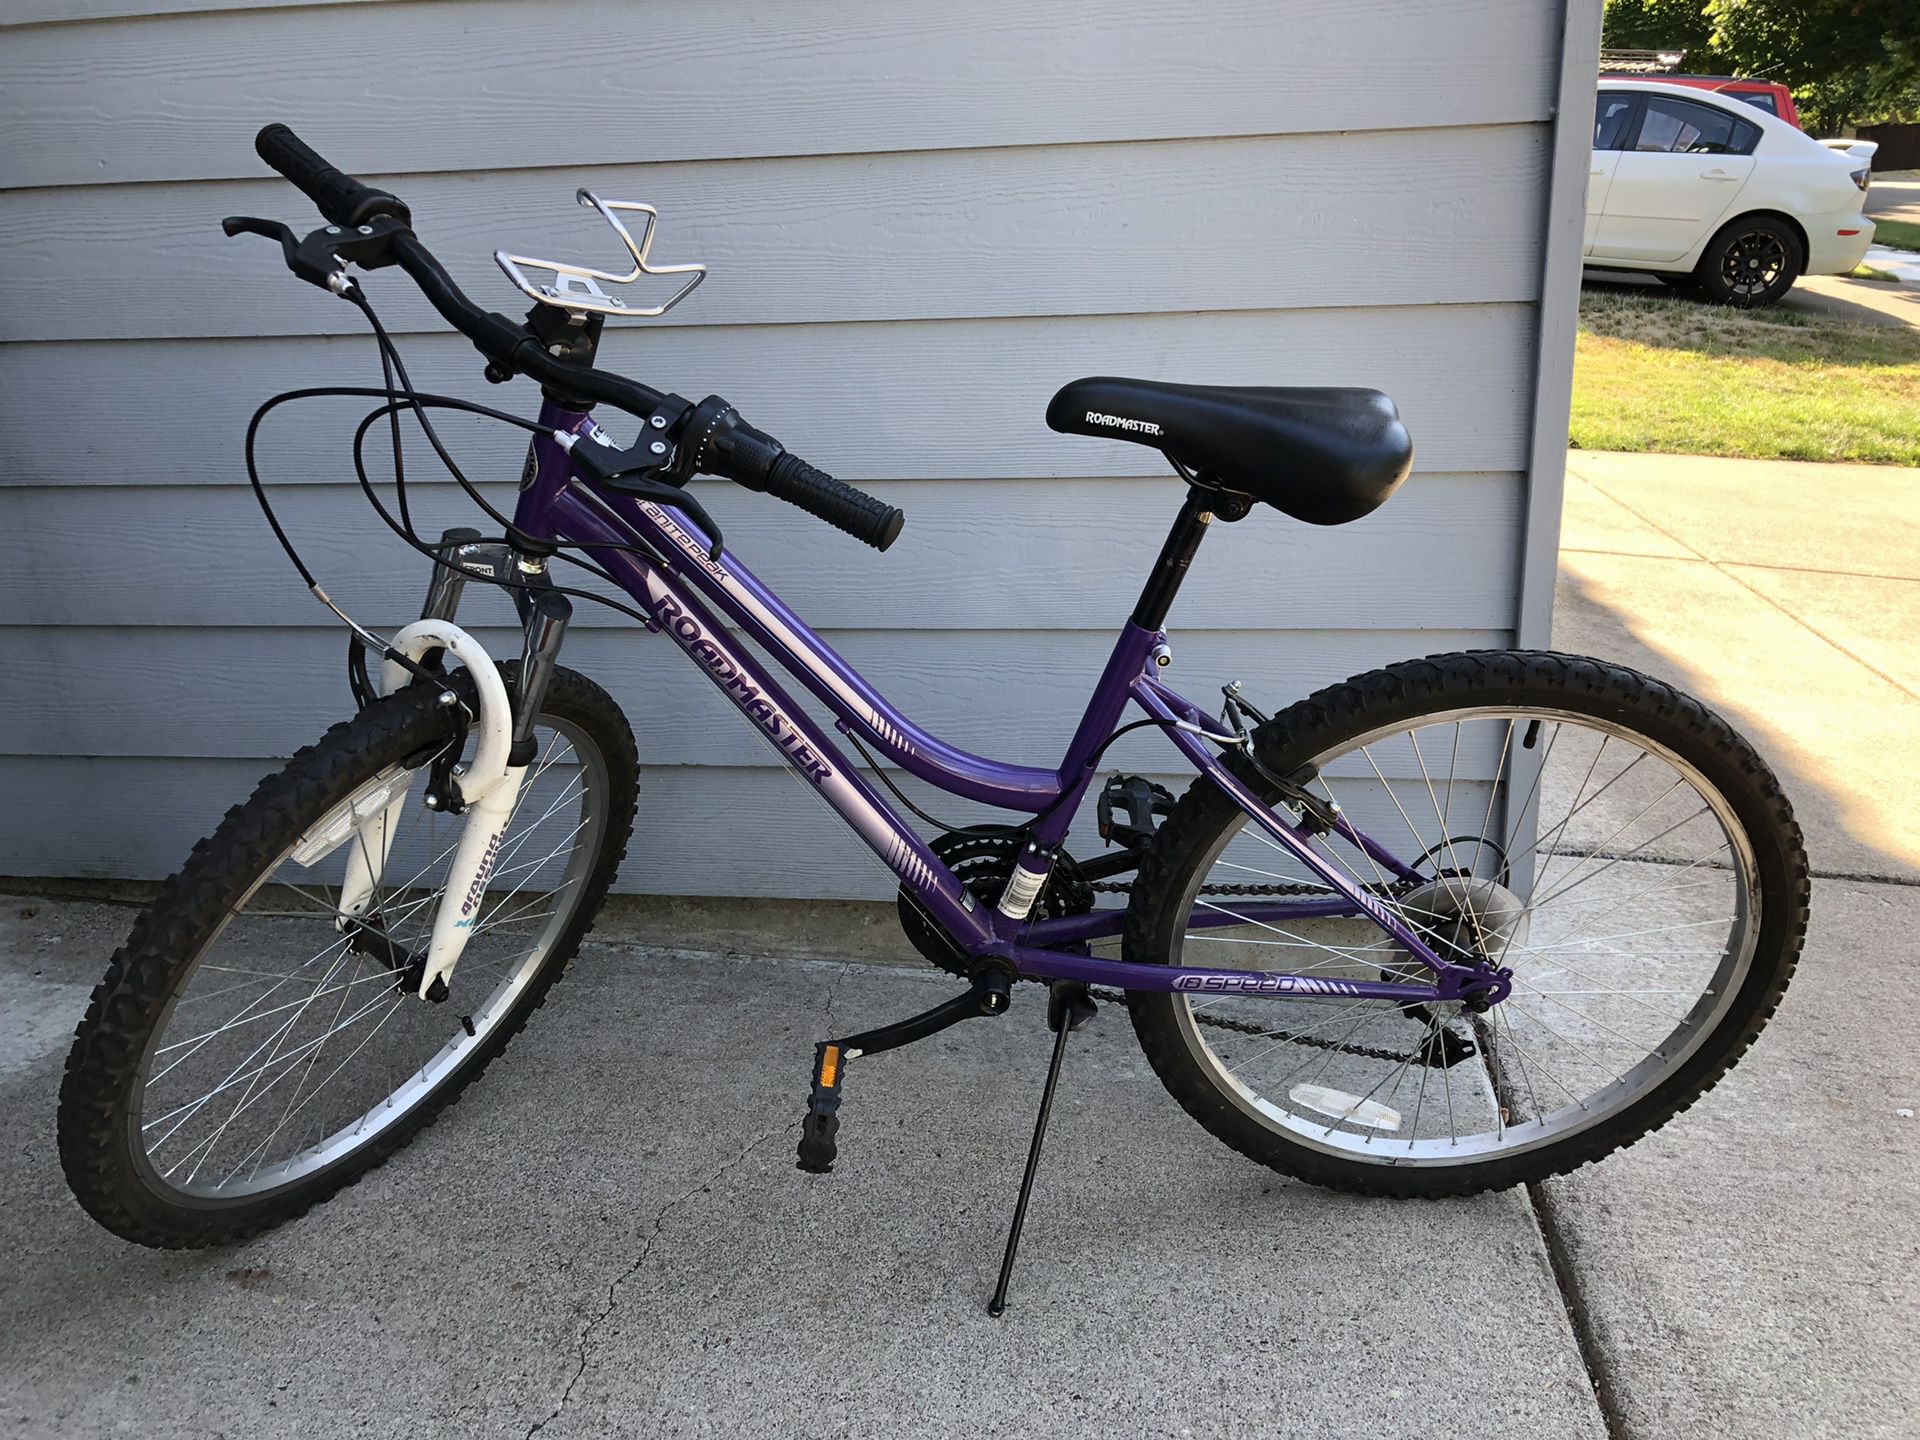 Roadmaster - 24 Inches Granite Peak Girl's Mountain Bike, Purple